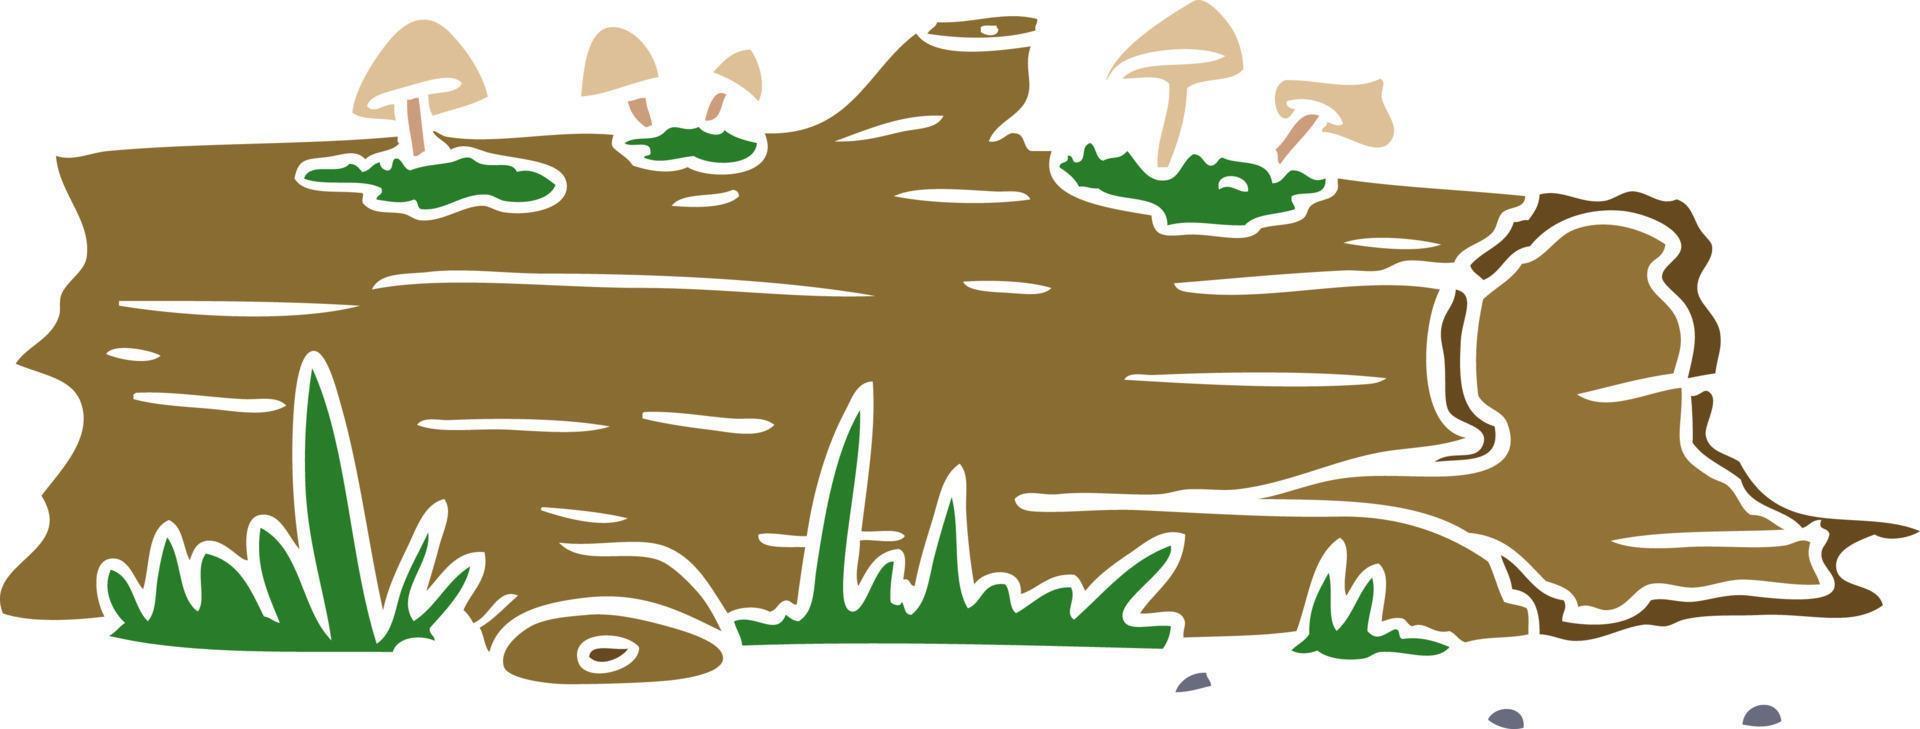 cartoon doodle of a tree log vector